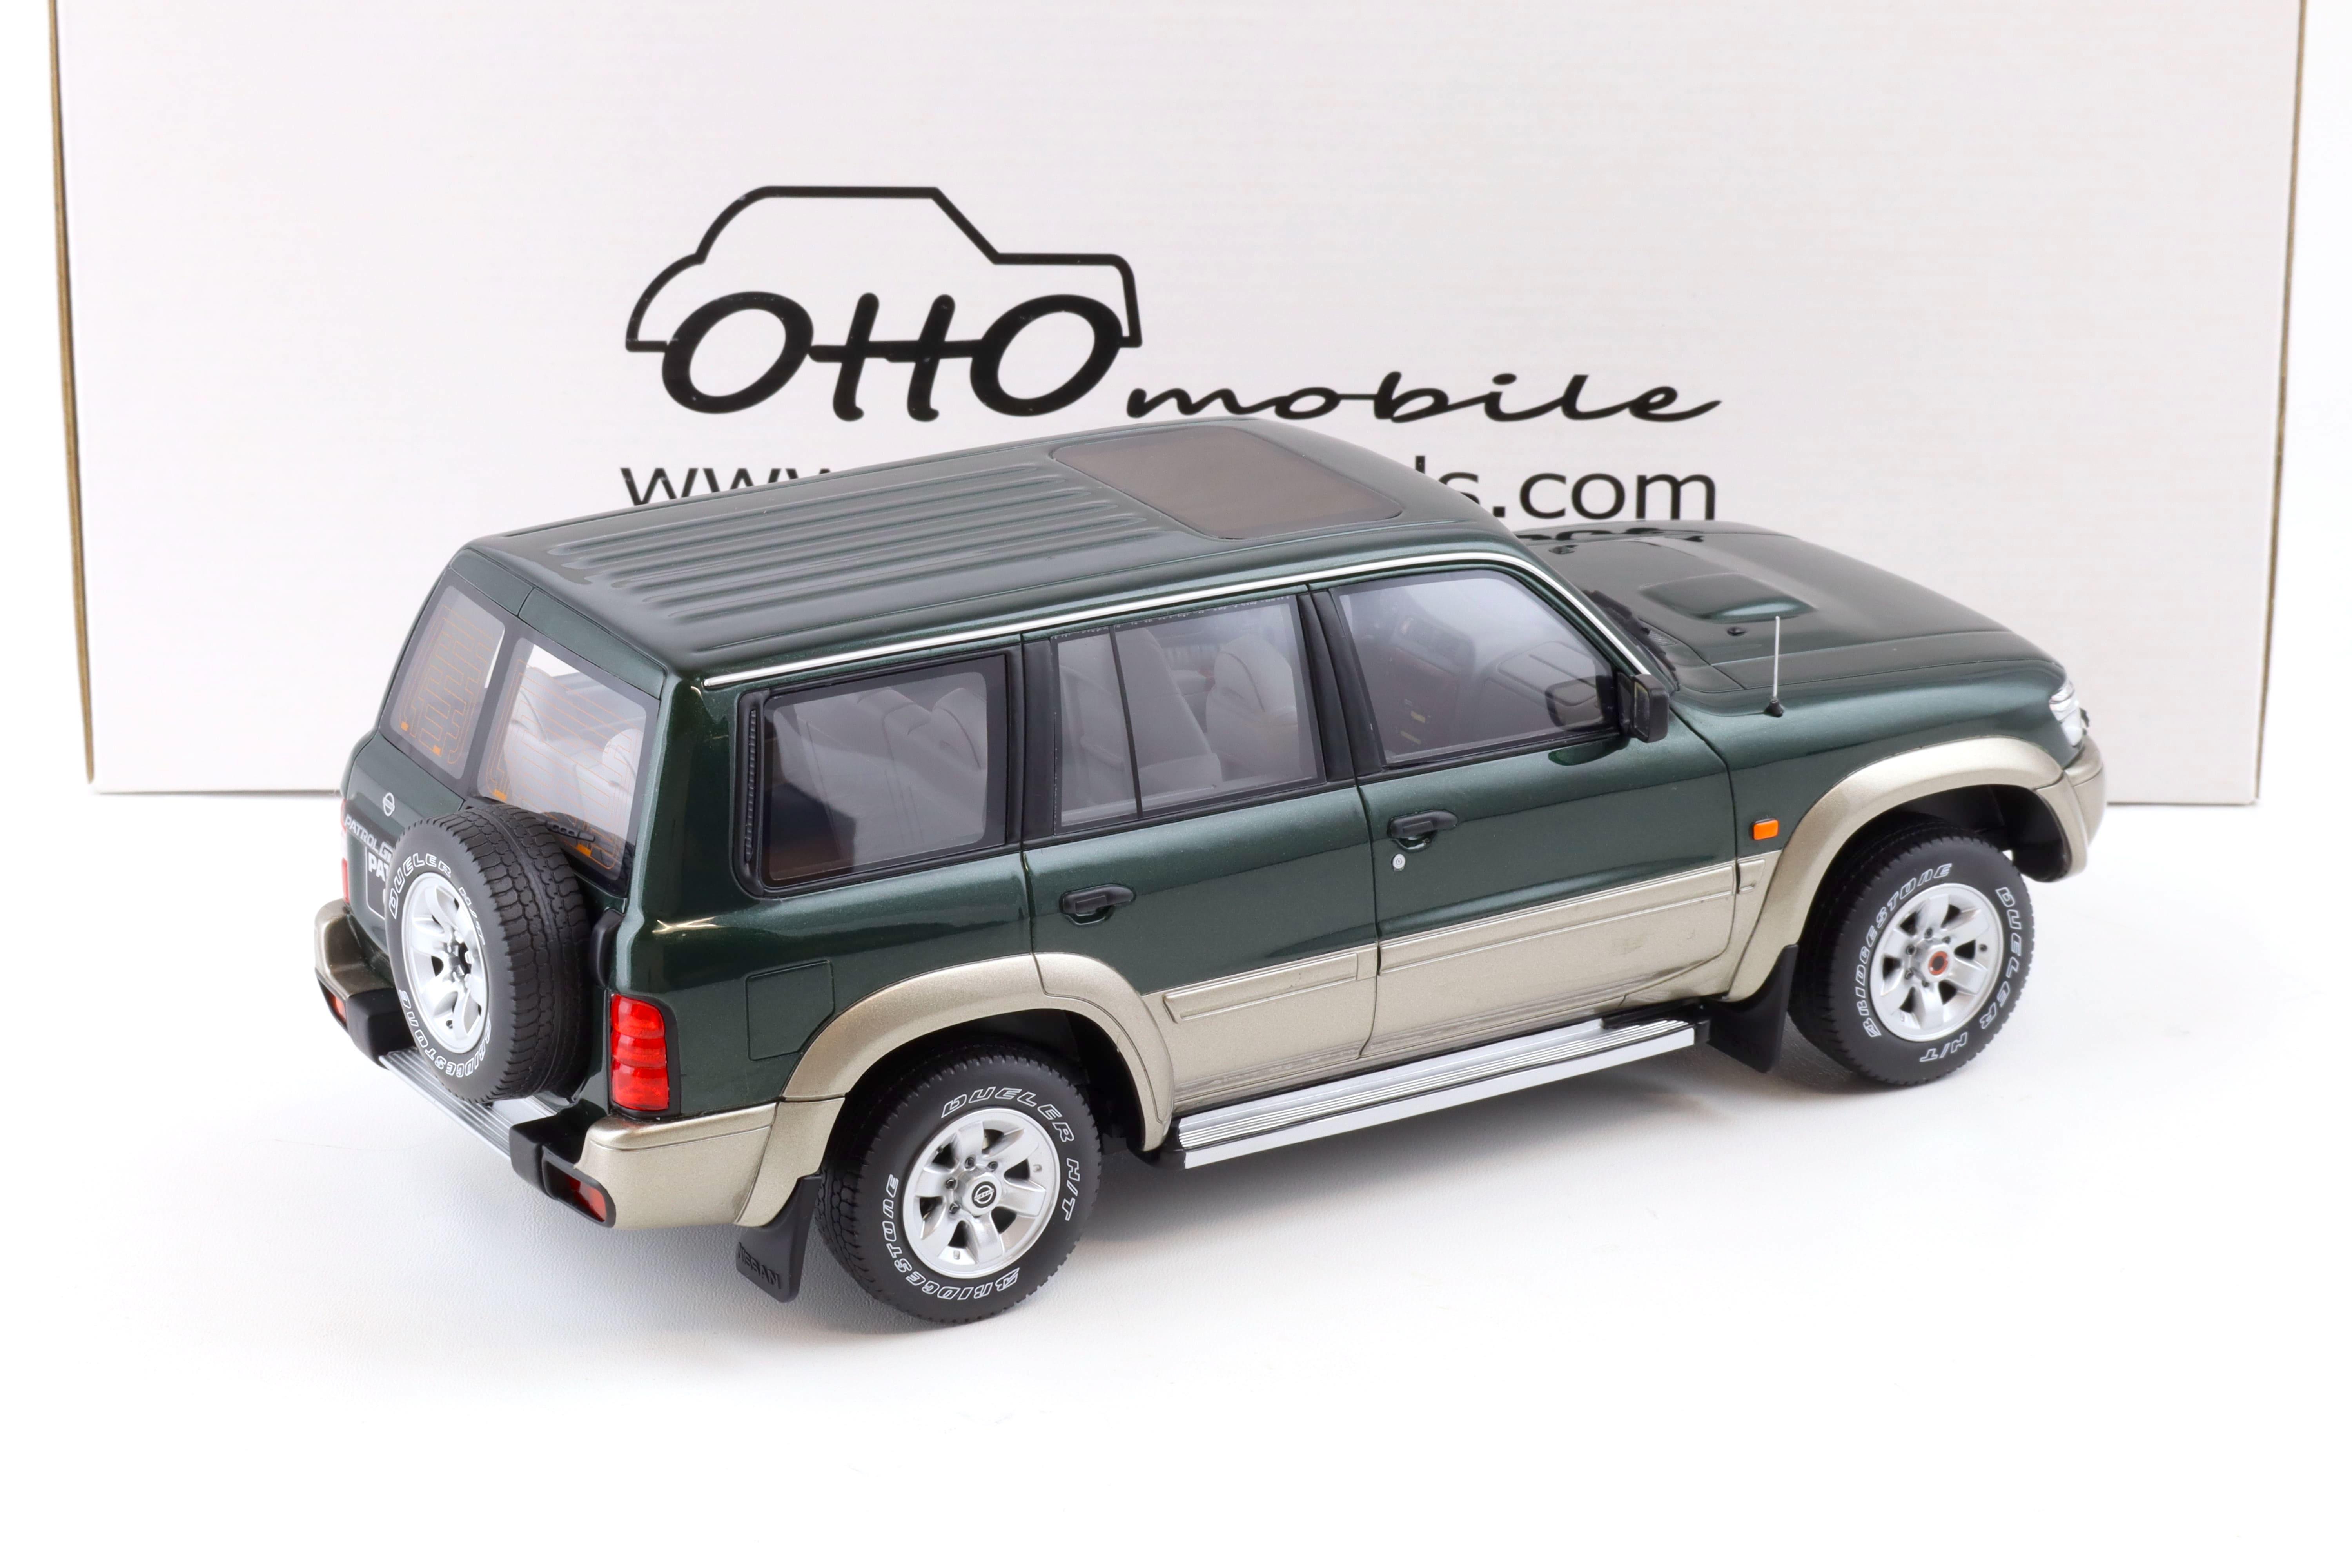 1:18 OTTO mobile OT433 Nissan Patrol GR Y61 green metallic 1998